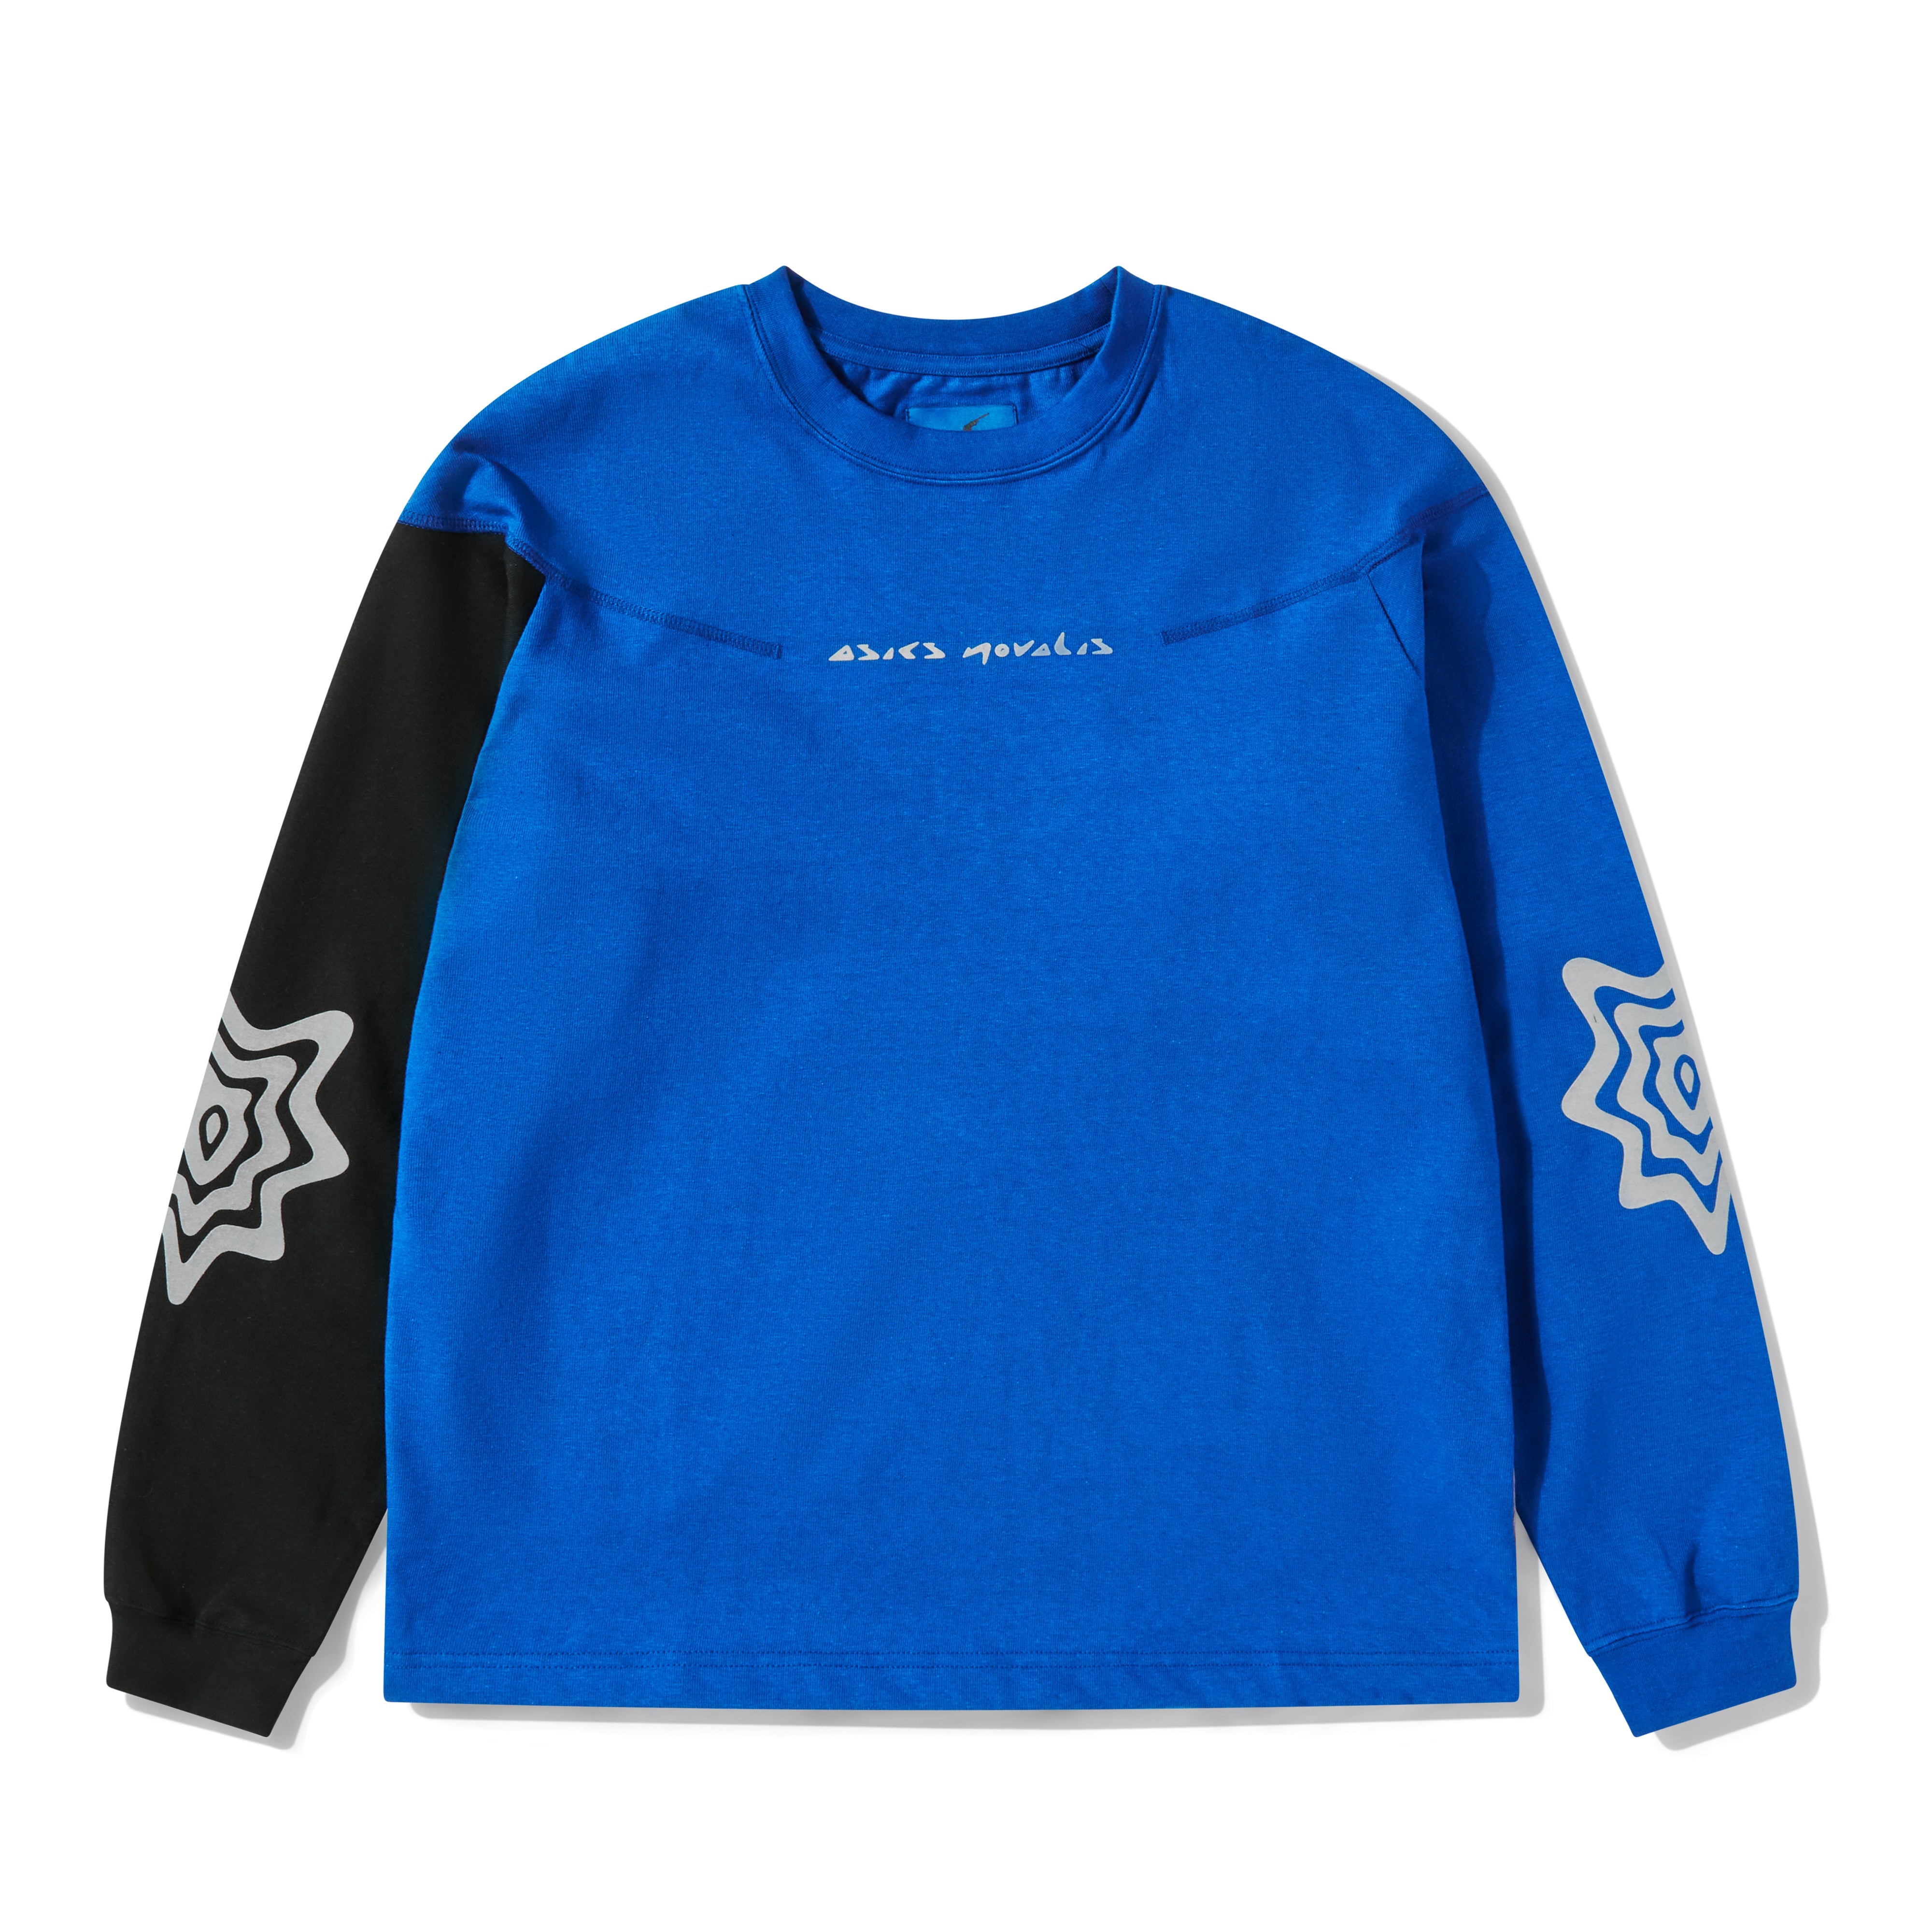 Asics Novalis - Bixance Long Sleeve T-Shirt - (Asics Blue